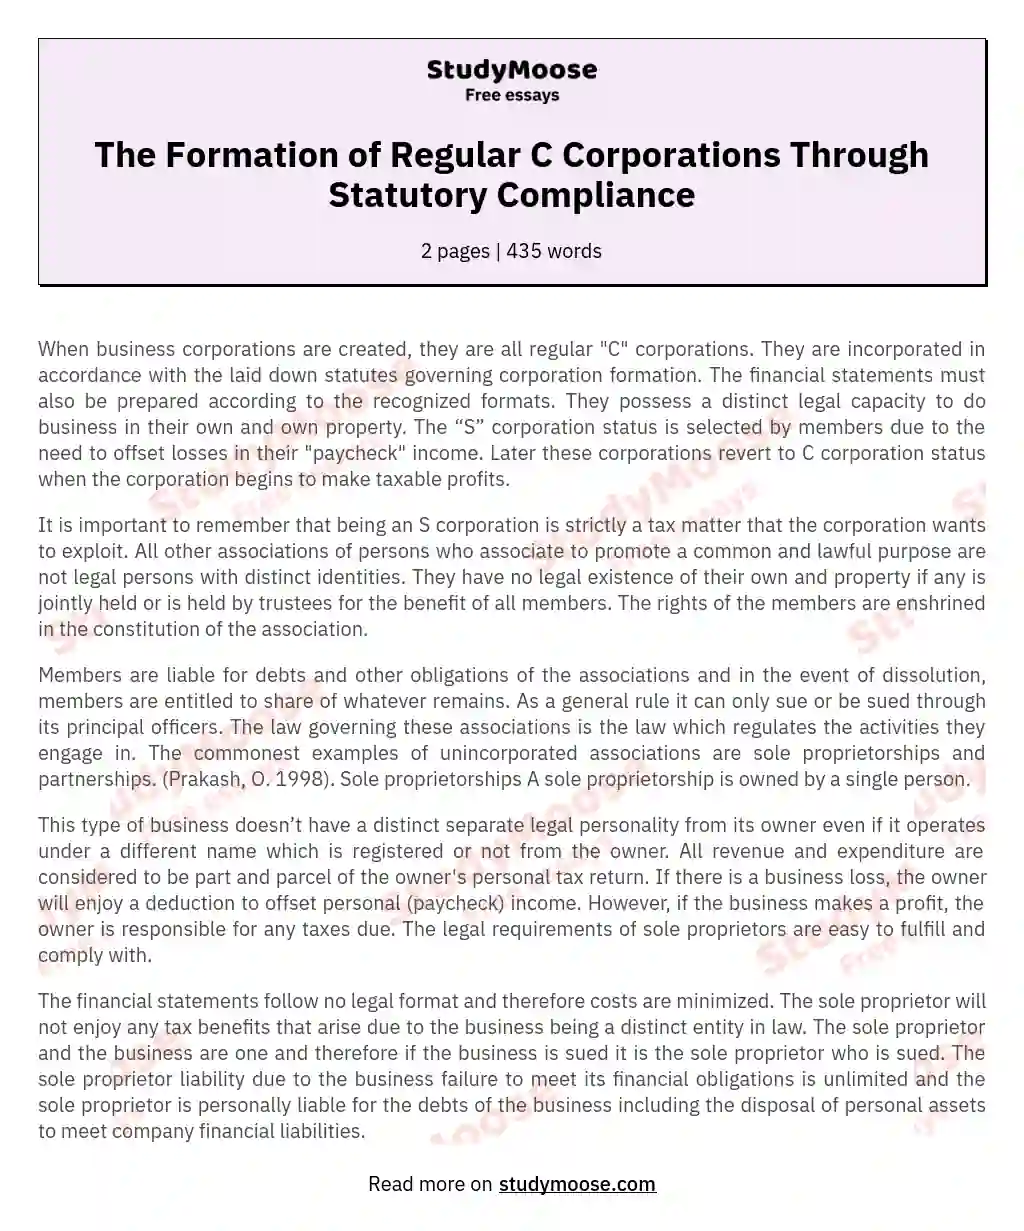 The Formation of Regular C Corporations Through Statutory Compliance essay